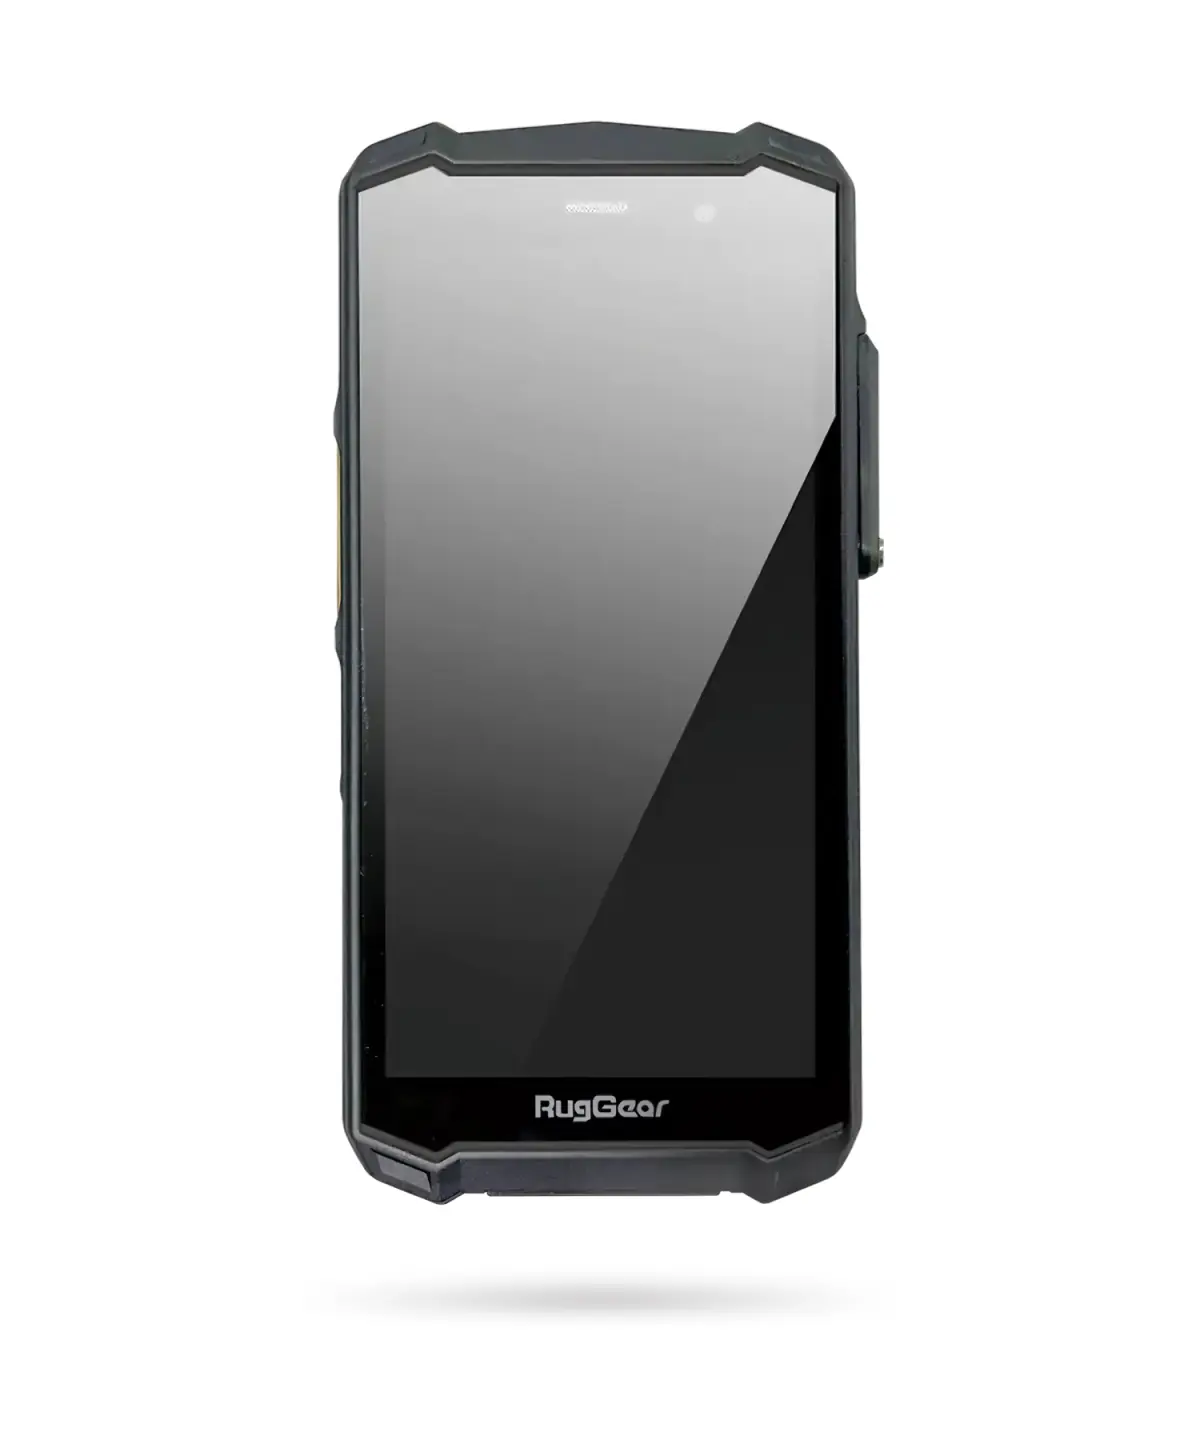 RugGear RG540 - Smartphone qui remplace une tablette